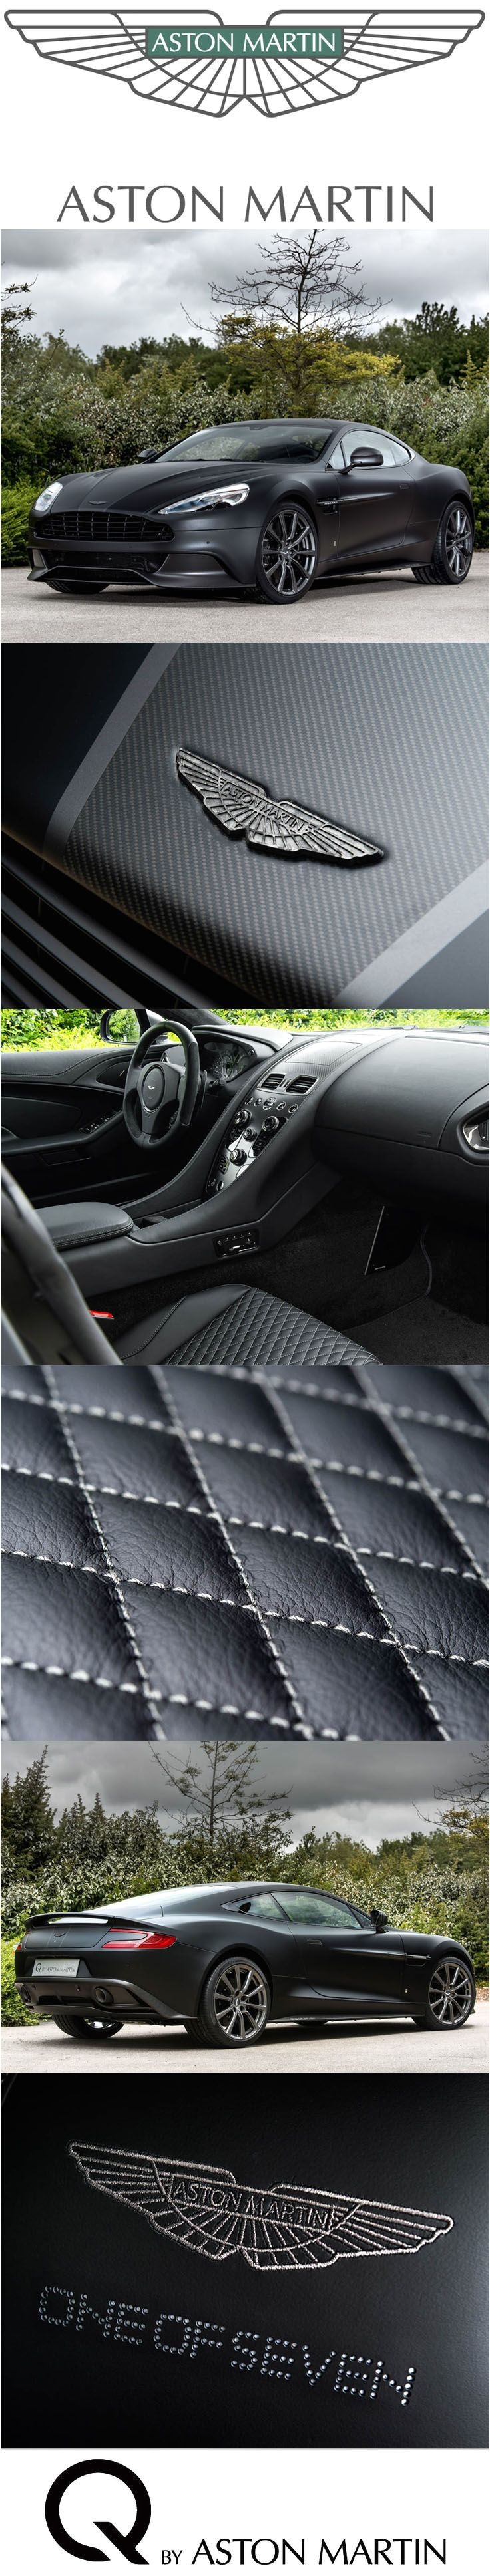 the q by aston martin bespoke personalisation service matte black and diamond leather seats